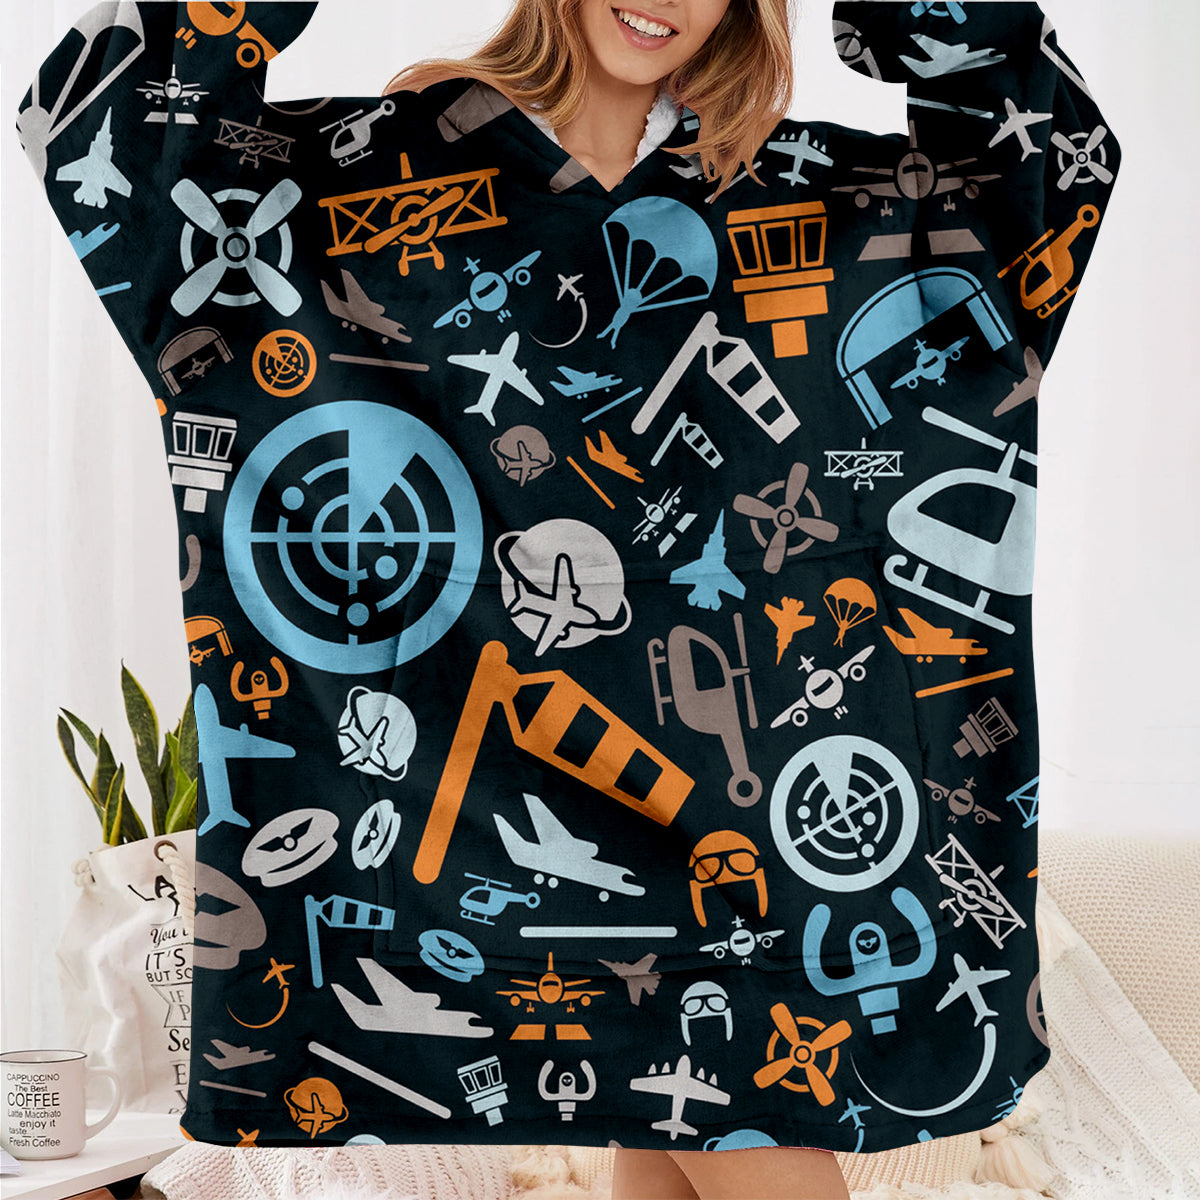 Aviation Icons Designed Blanket Hoodies